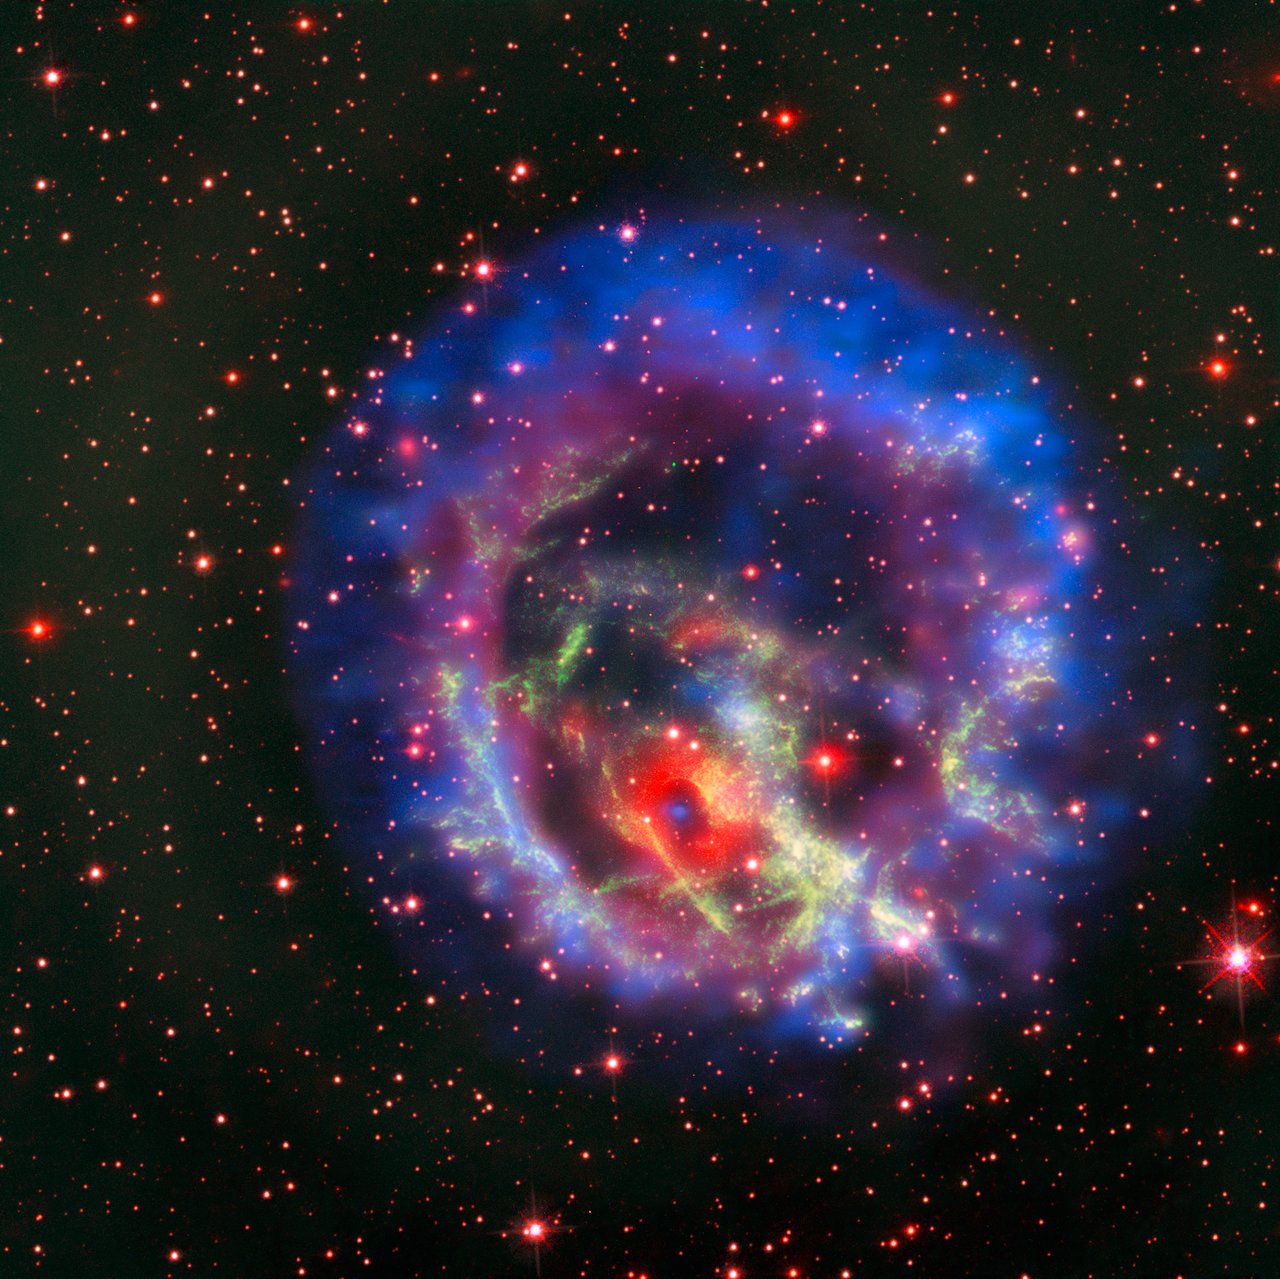 Supernova explosion image